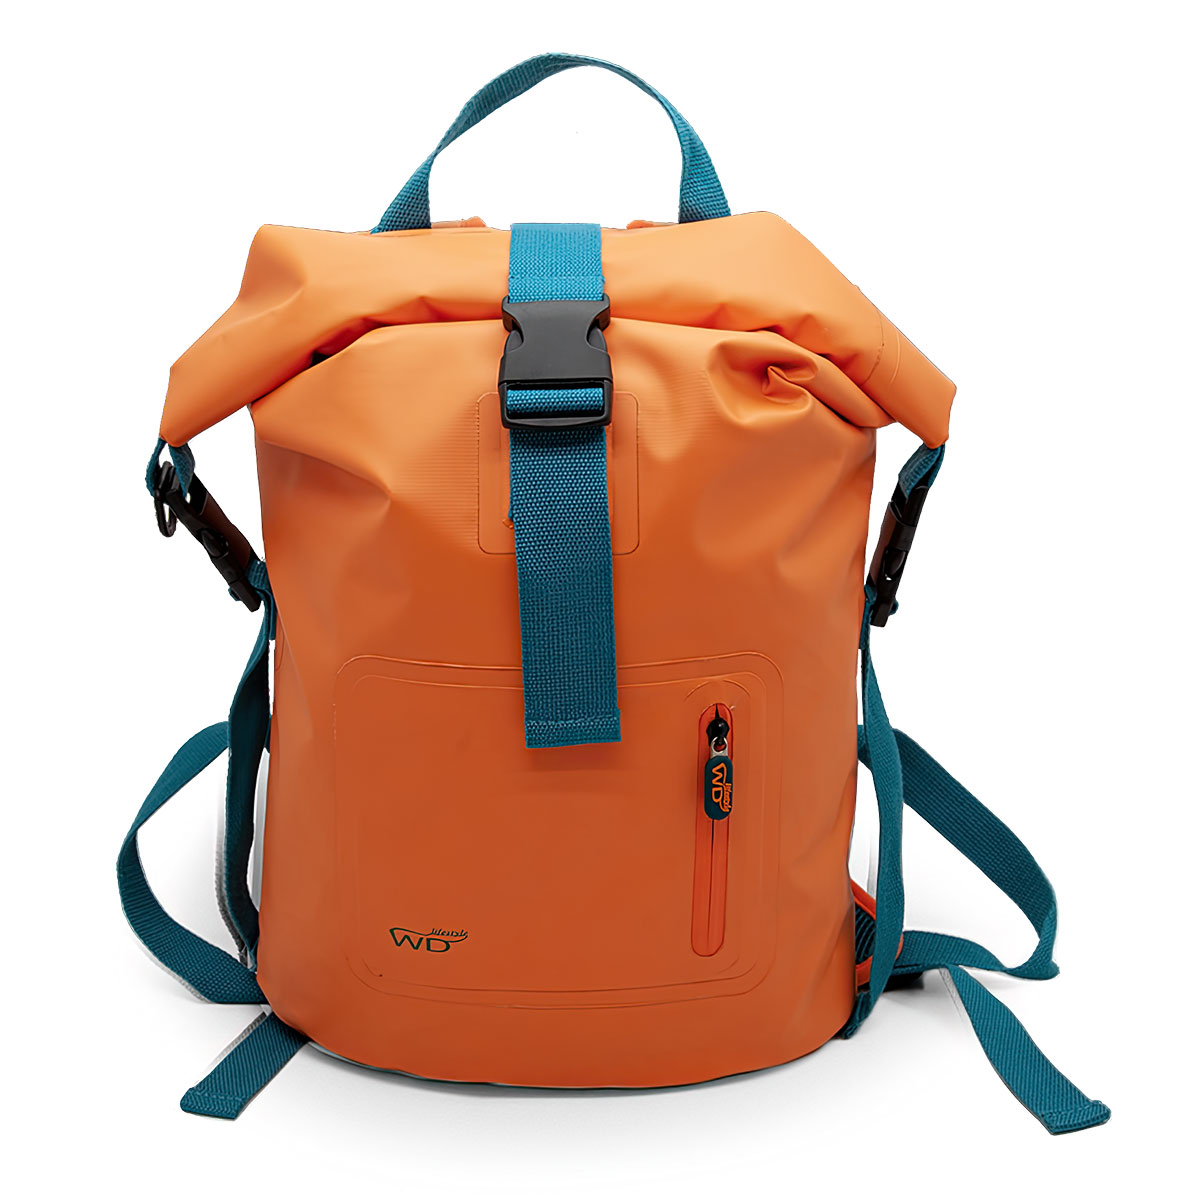 Рюкзак водонепроницаемый WD Lifestyle Malibu 20л, оранжевый рюкзак bionic 70 оранжевый сплав